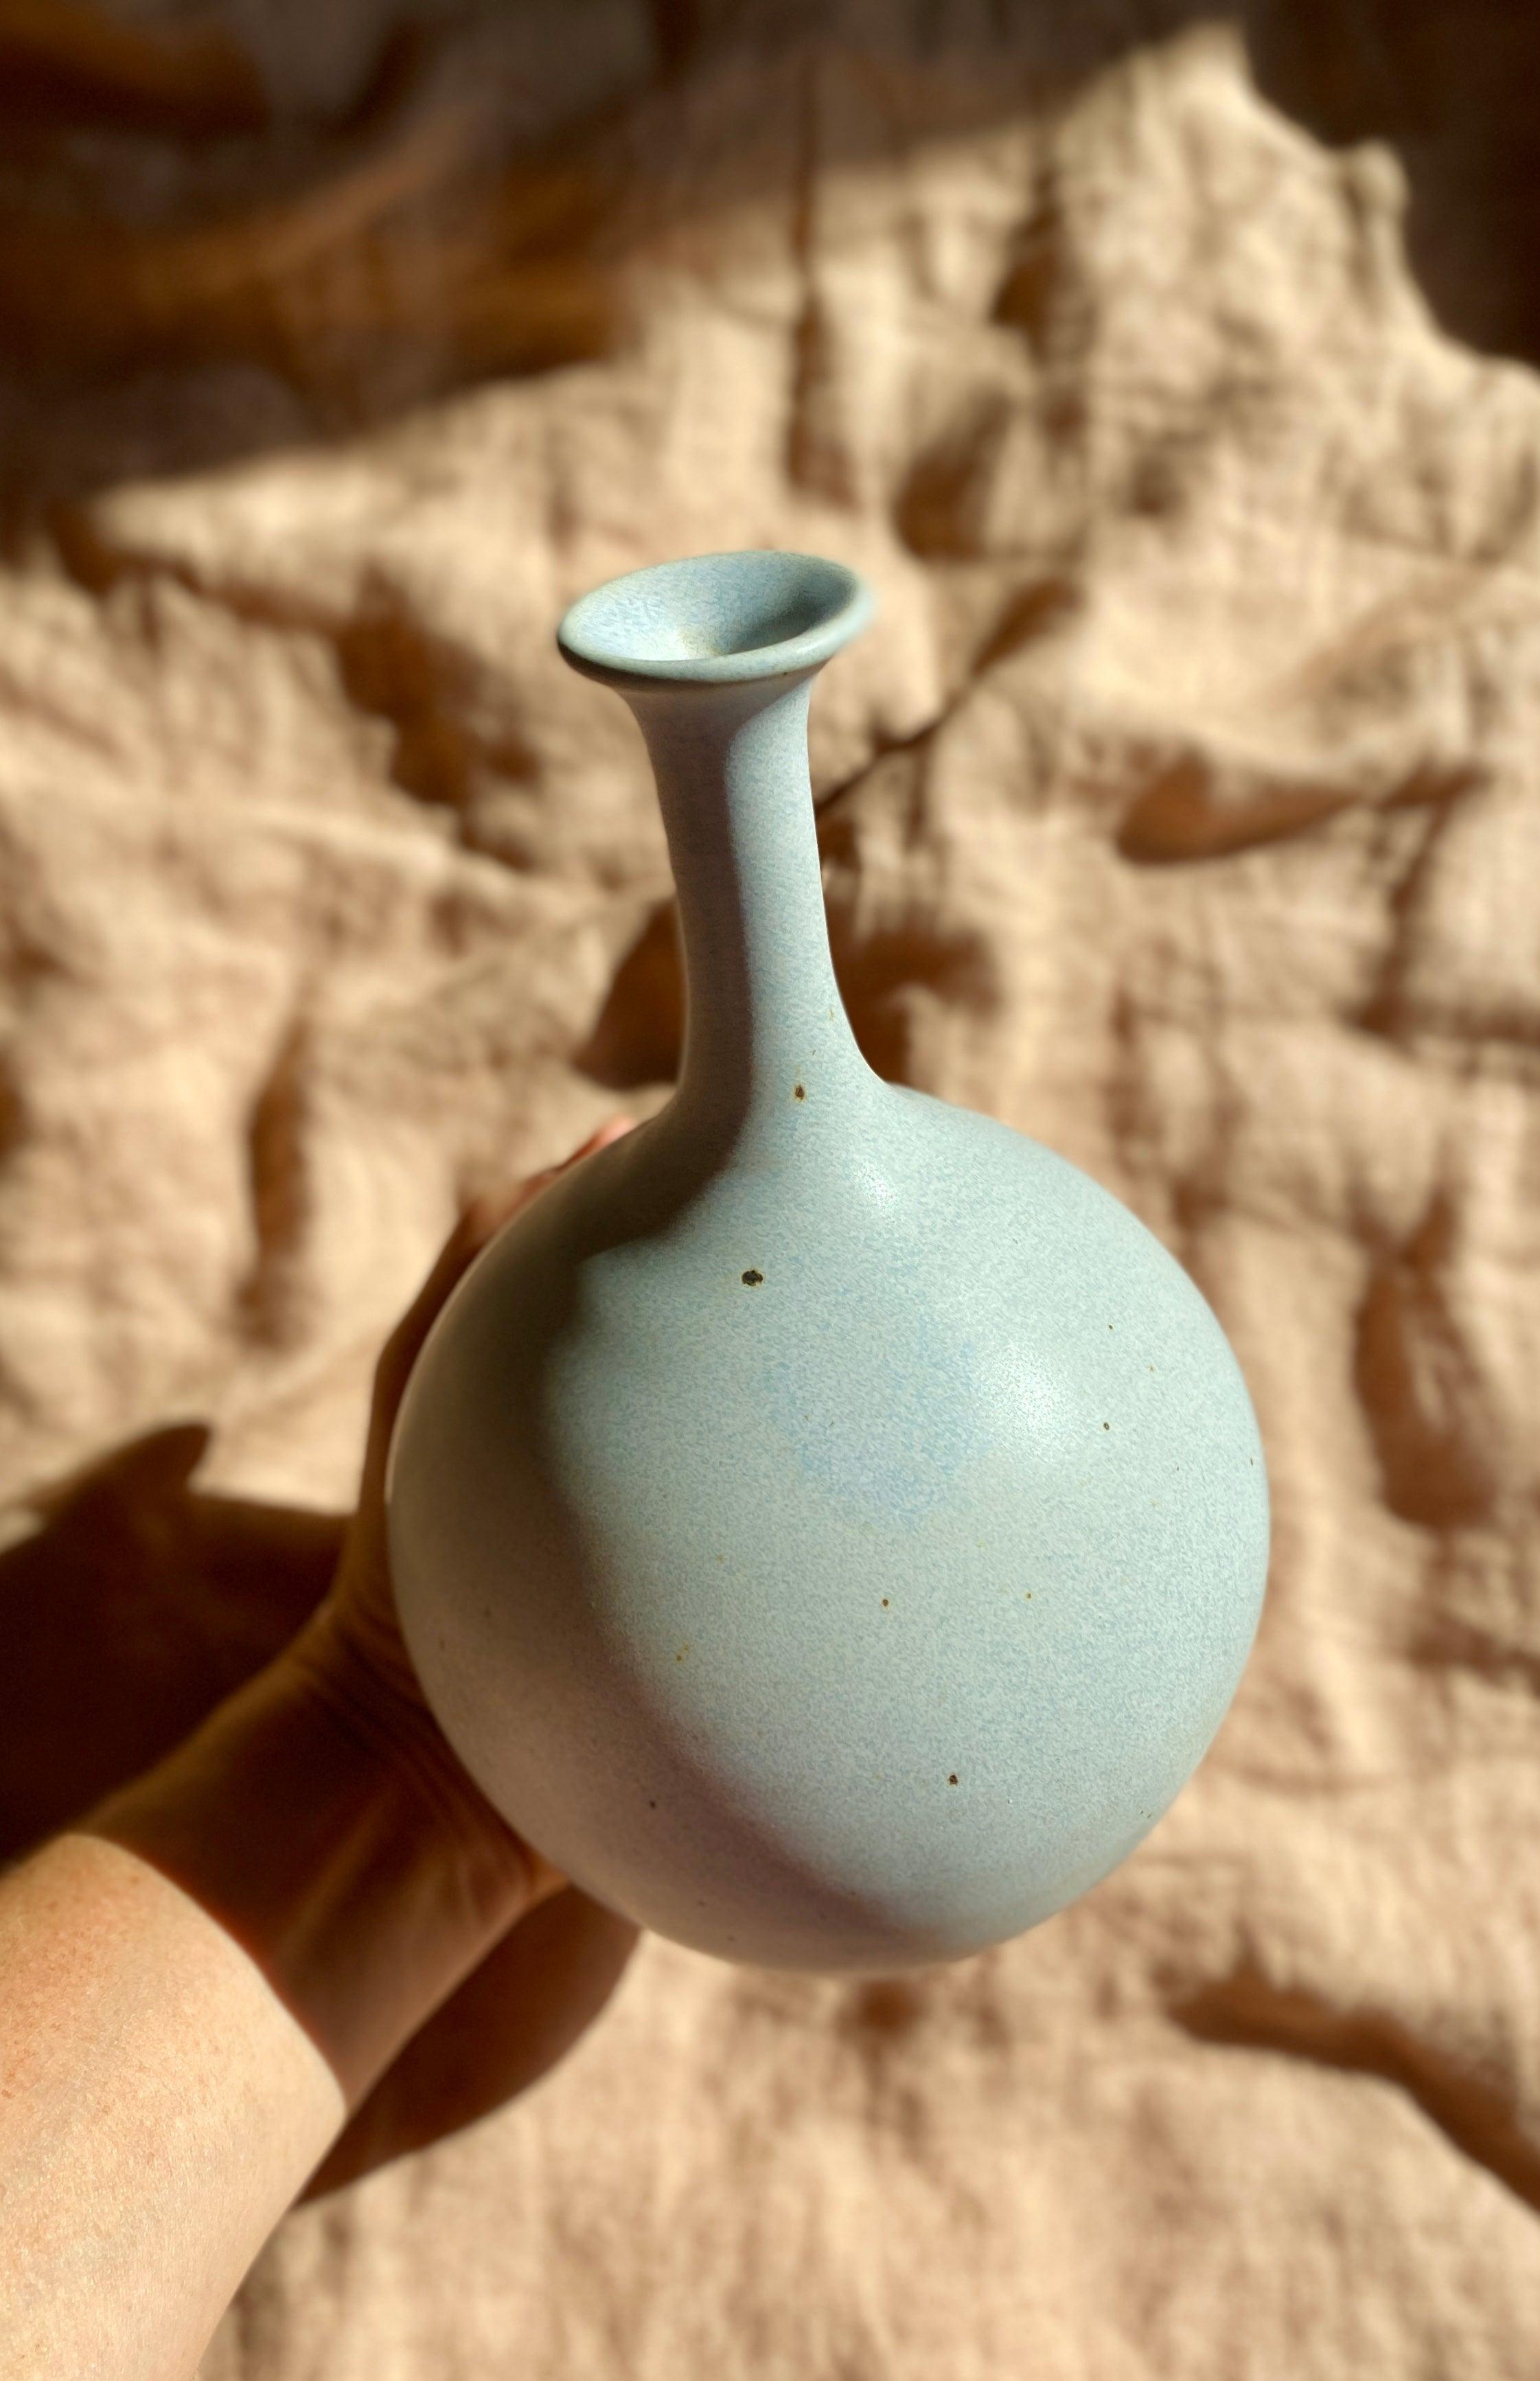 Lavender bottle-neck wide vase No. 1 - Dana Chieco Studio